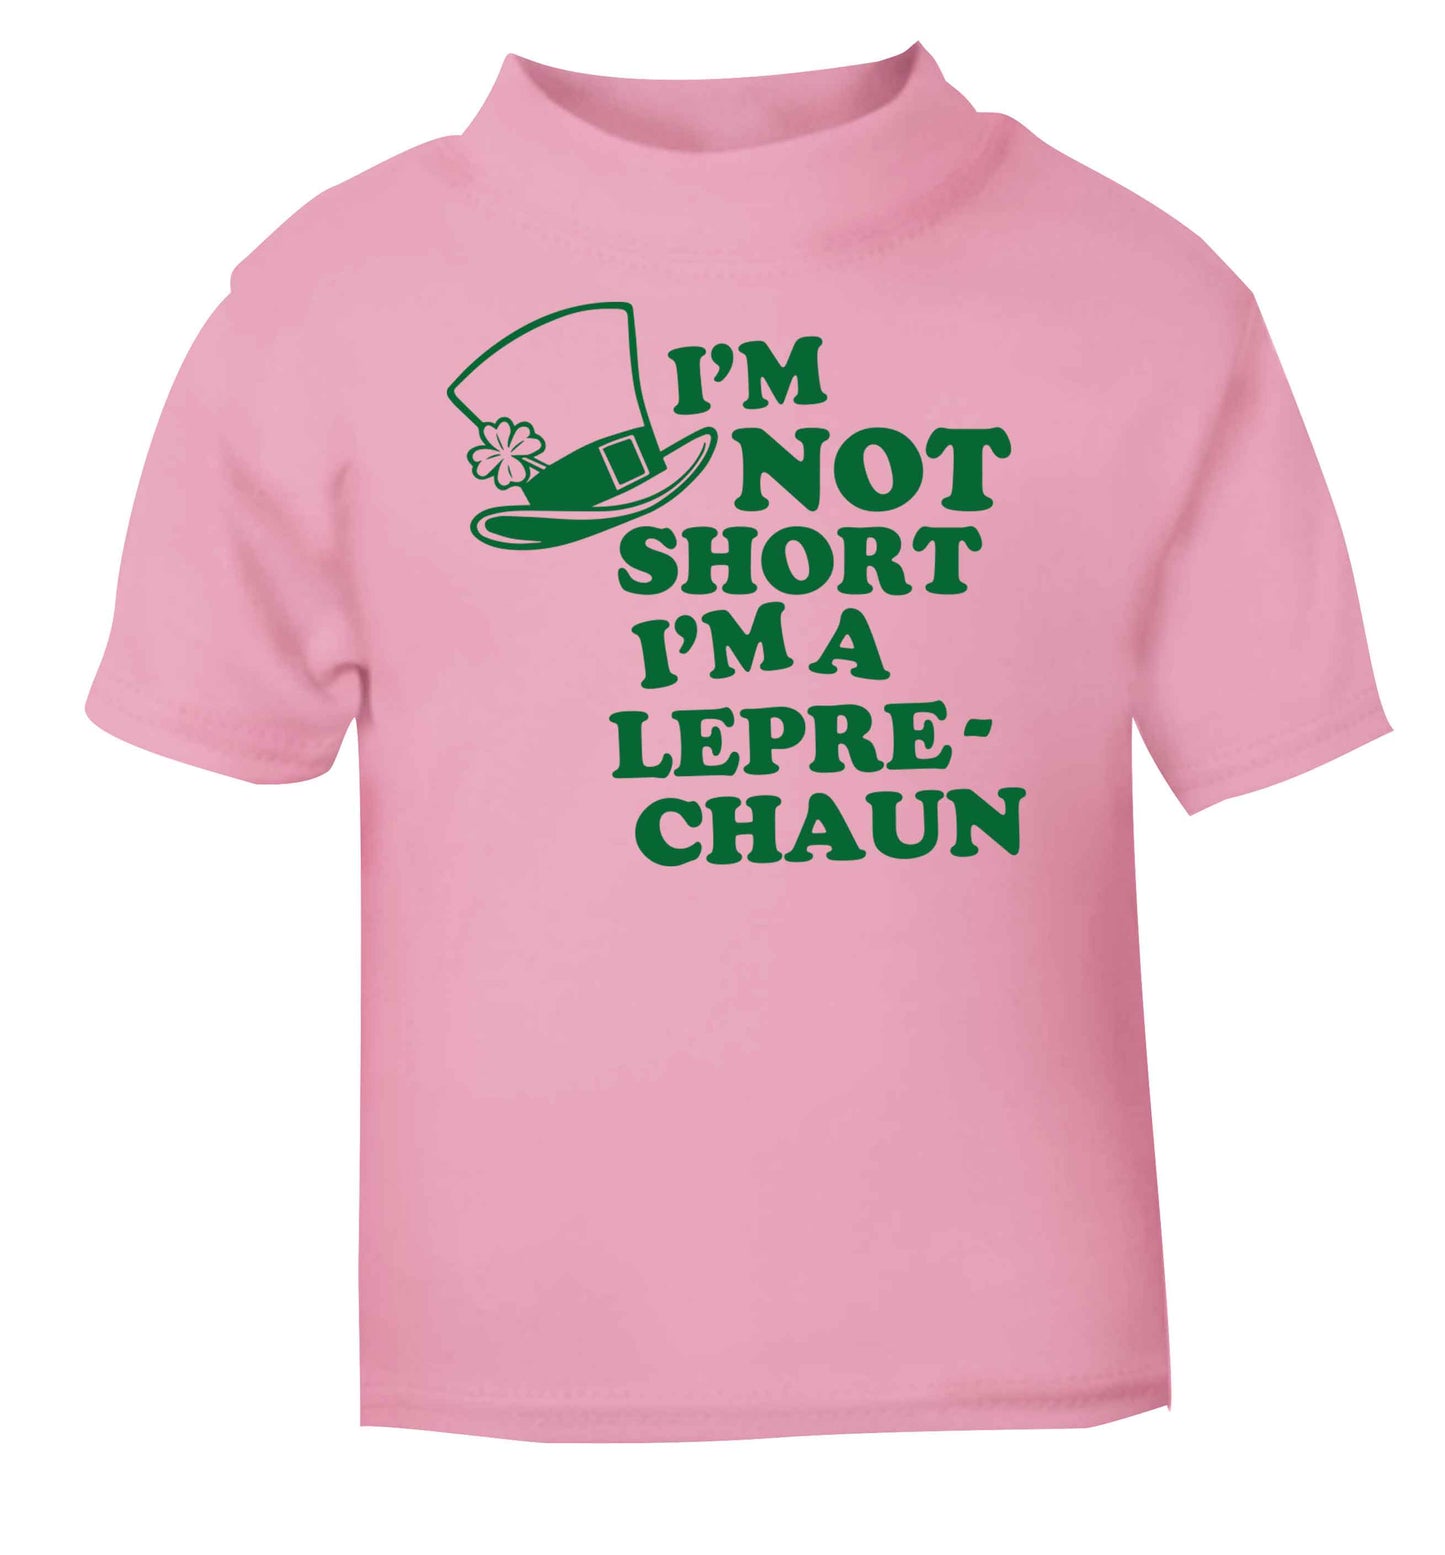 I'm not short I'm a leprechaun light pink baby toddler Tshirt 2 Years